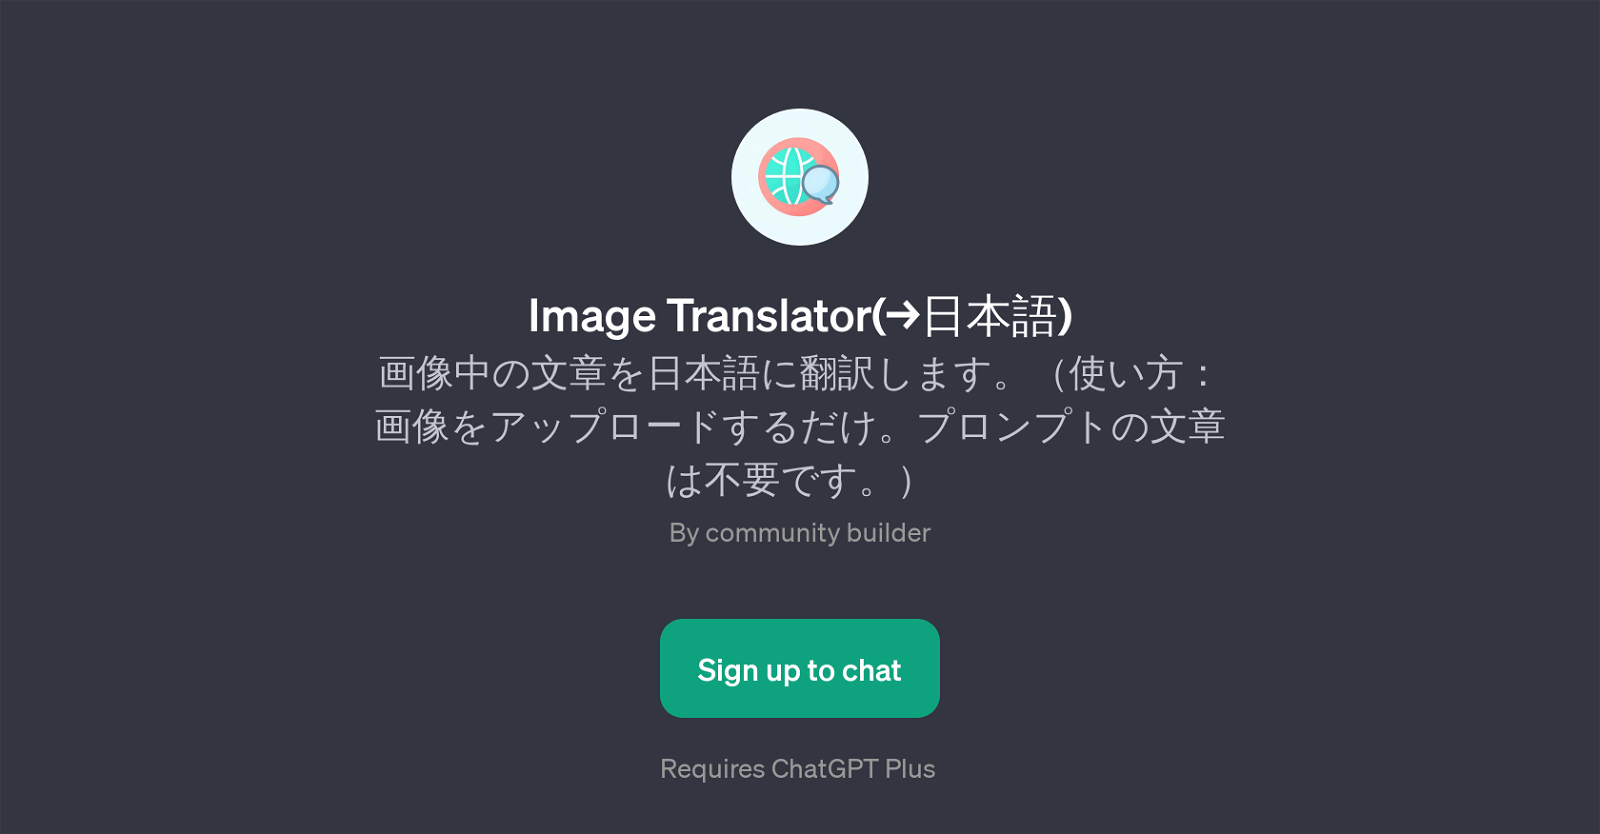 Image Translator() website